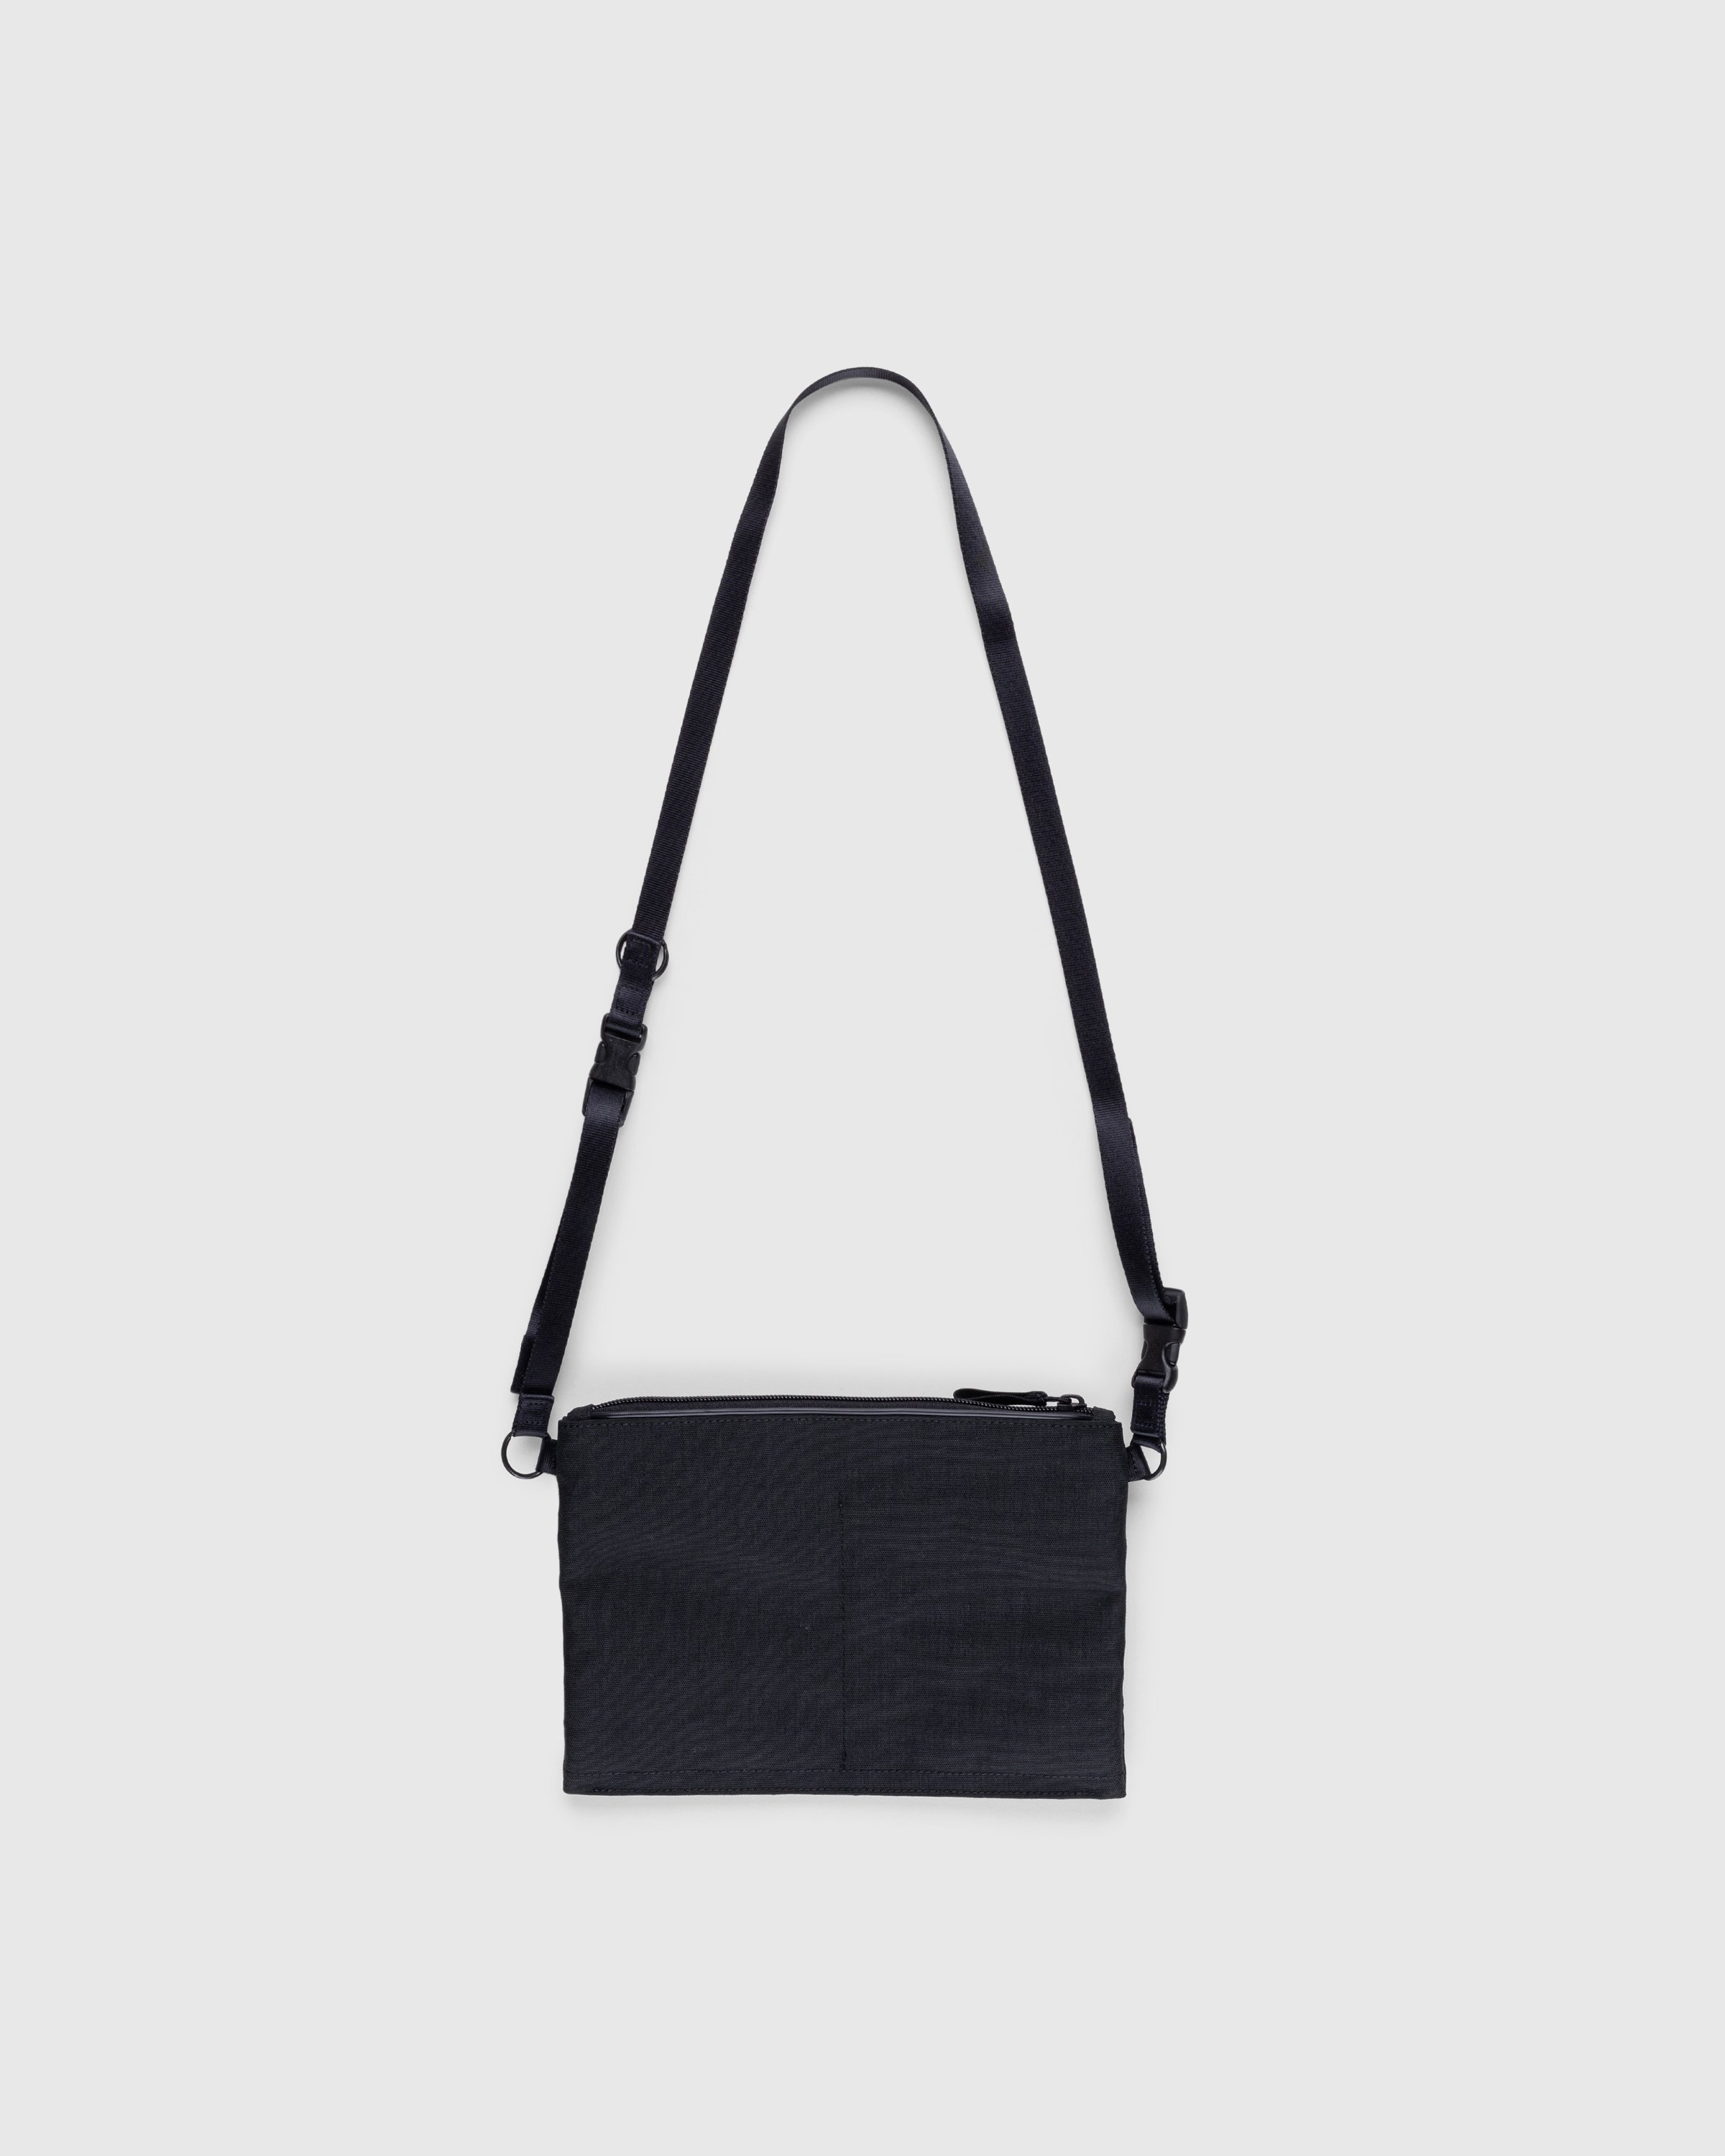 Porter-Yoshida & Co. - Sacoche Hybrid Shoulder Bag Black - Accessories - Black - Image 2